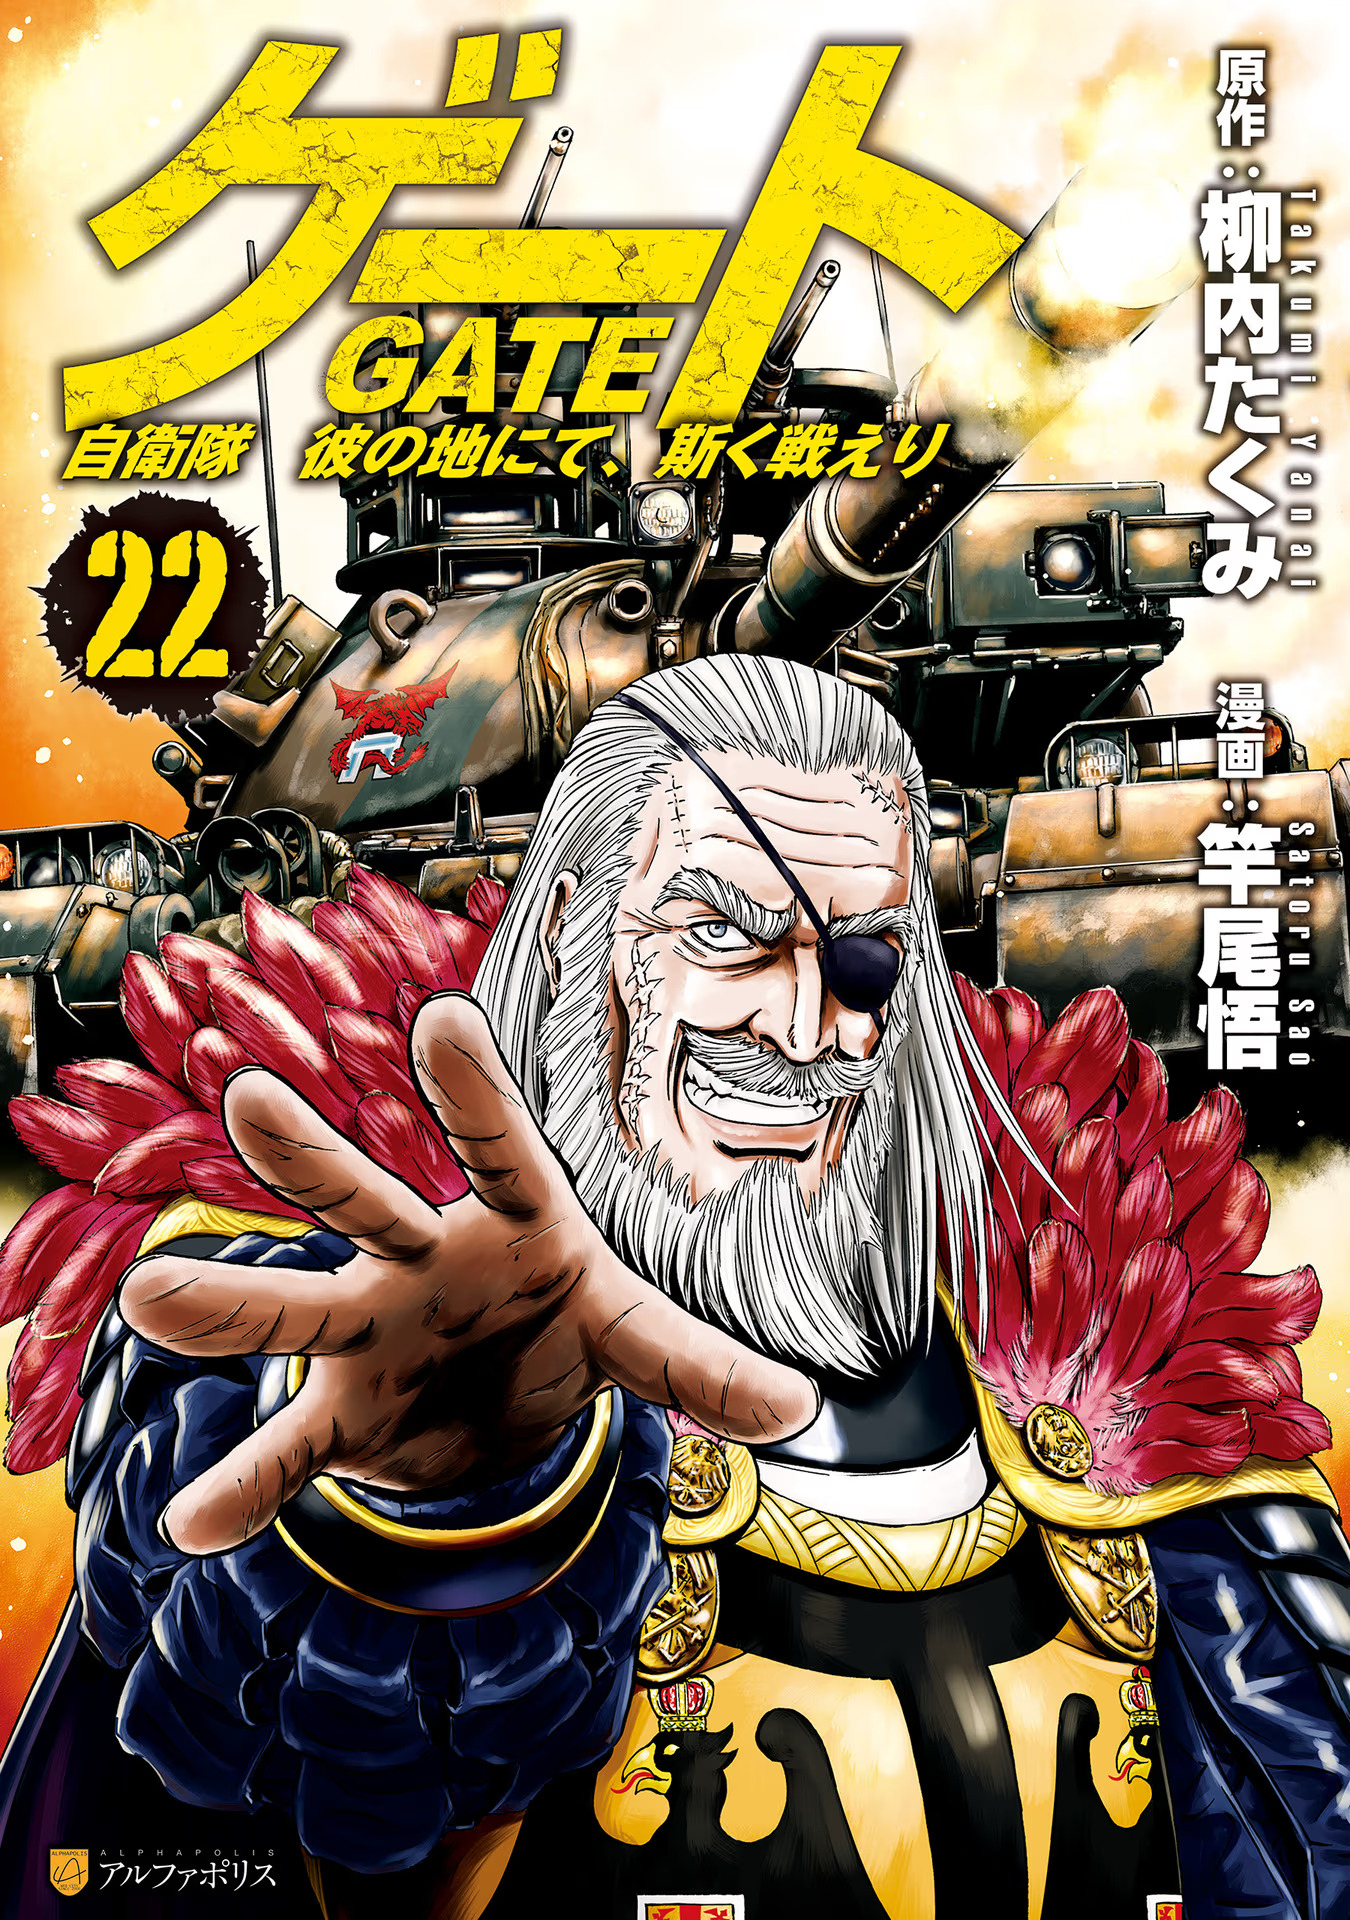 Comic: GATE: Jieitai Kano Chi nite, Kaku Tatakaeri 9 (Japan(GATE -  Alphapolis comics (GJA)) Col:JP-GJA-09